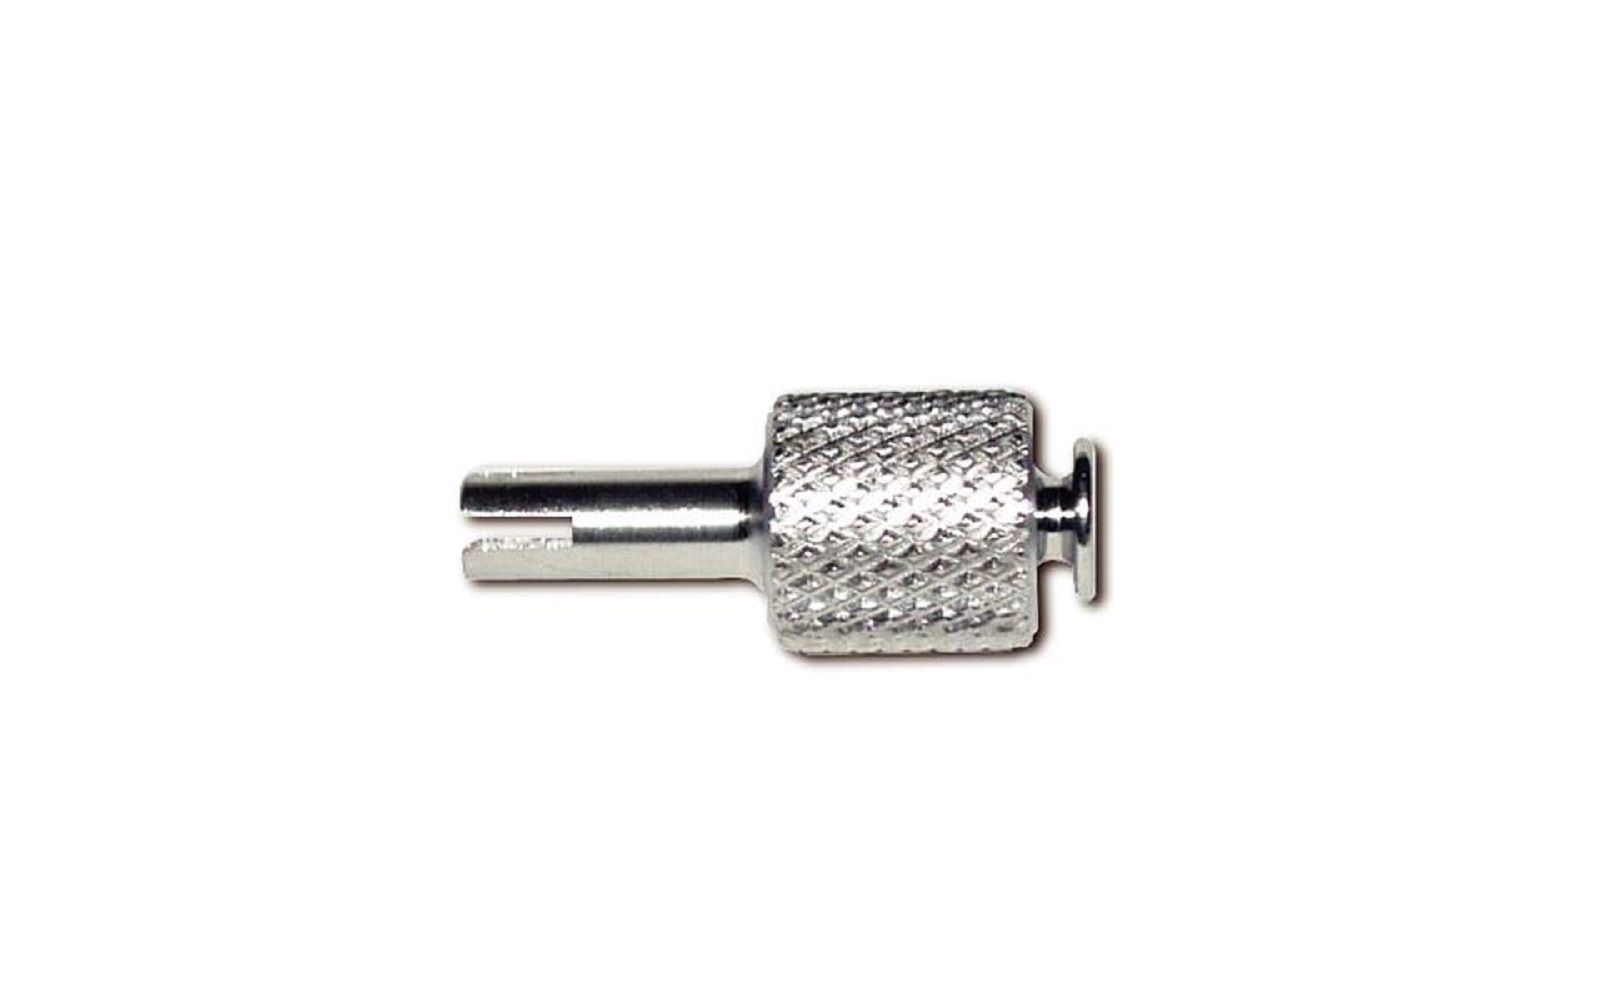 Flexi-post® external wrench